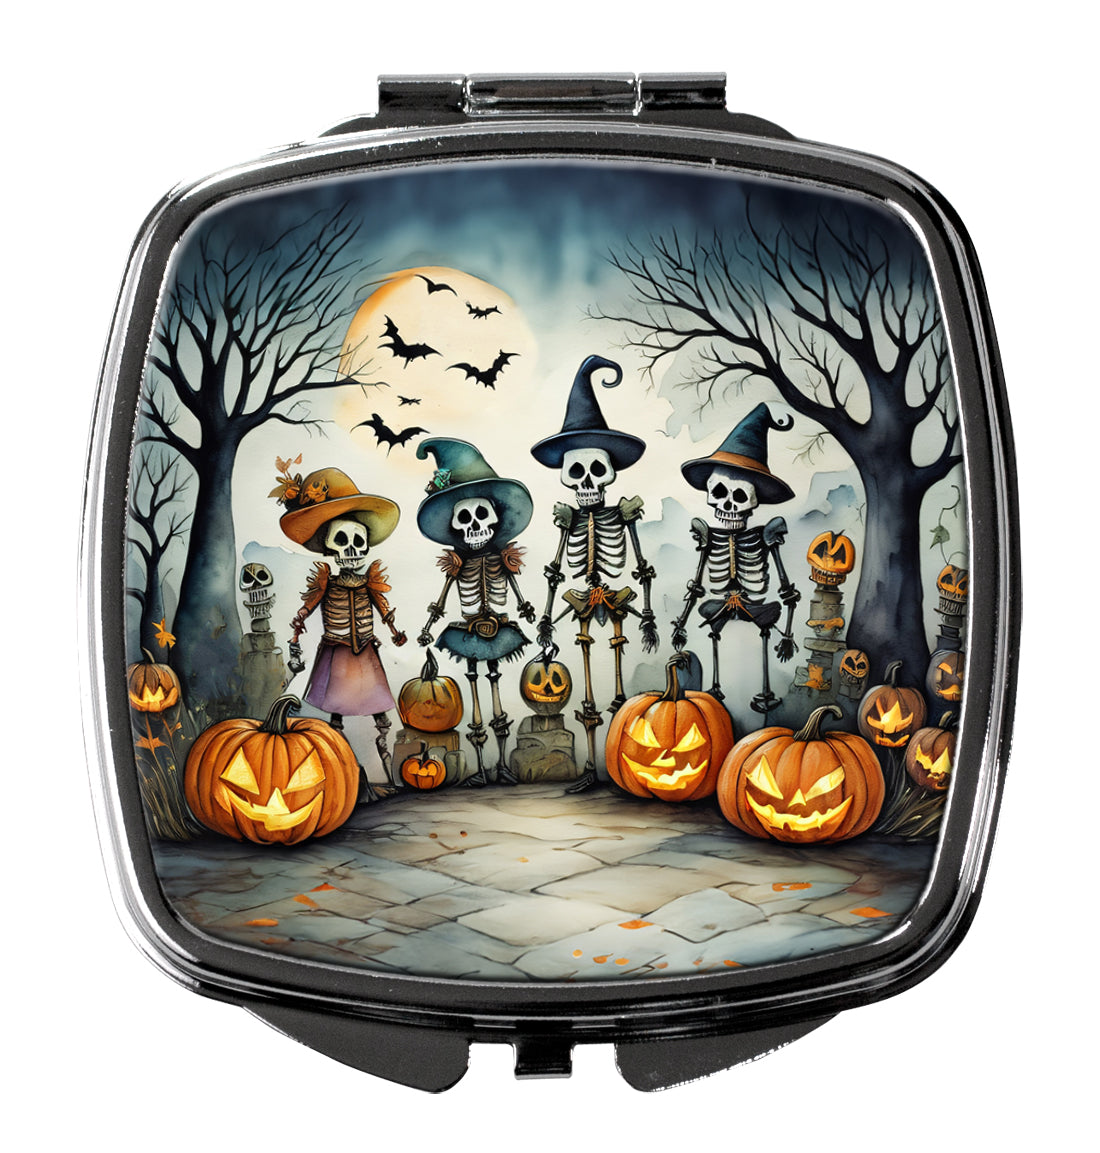 Buy this Calacas Skeletons Spooky Halloween Compact Mirror